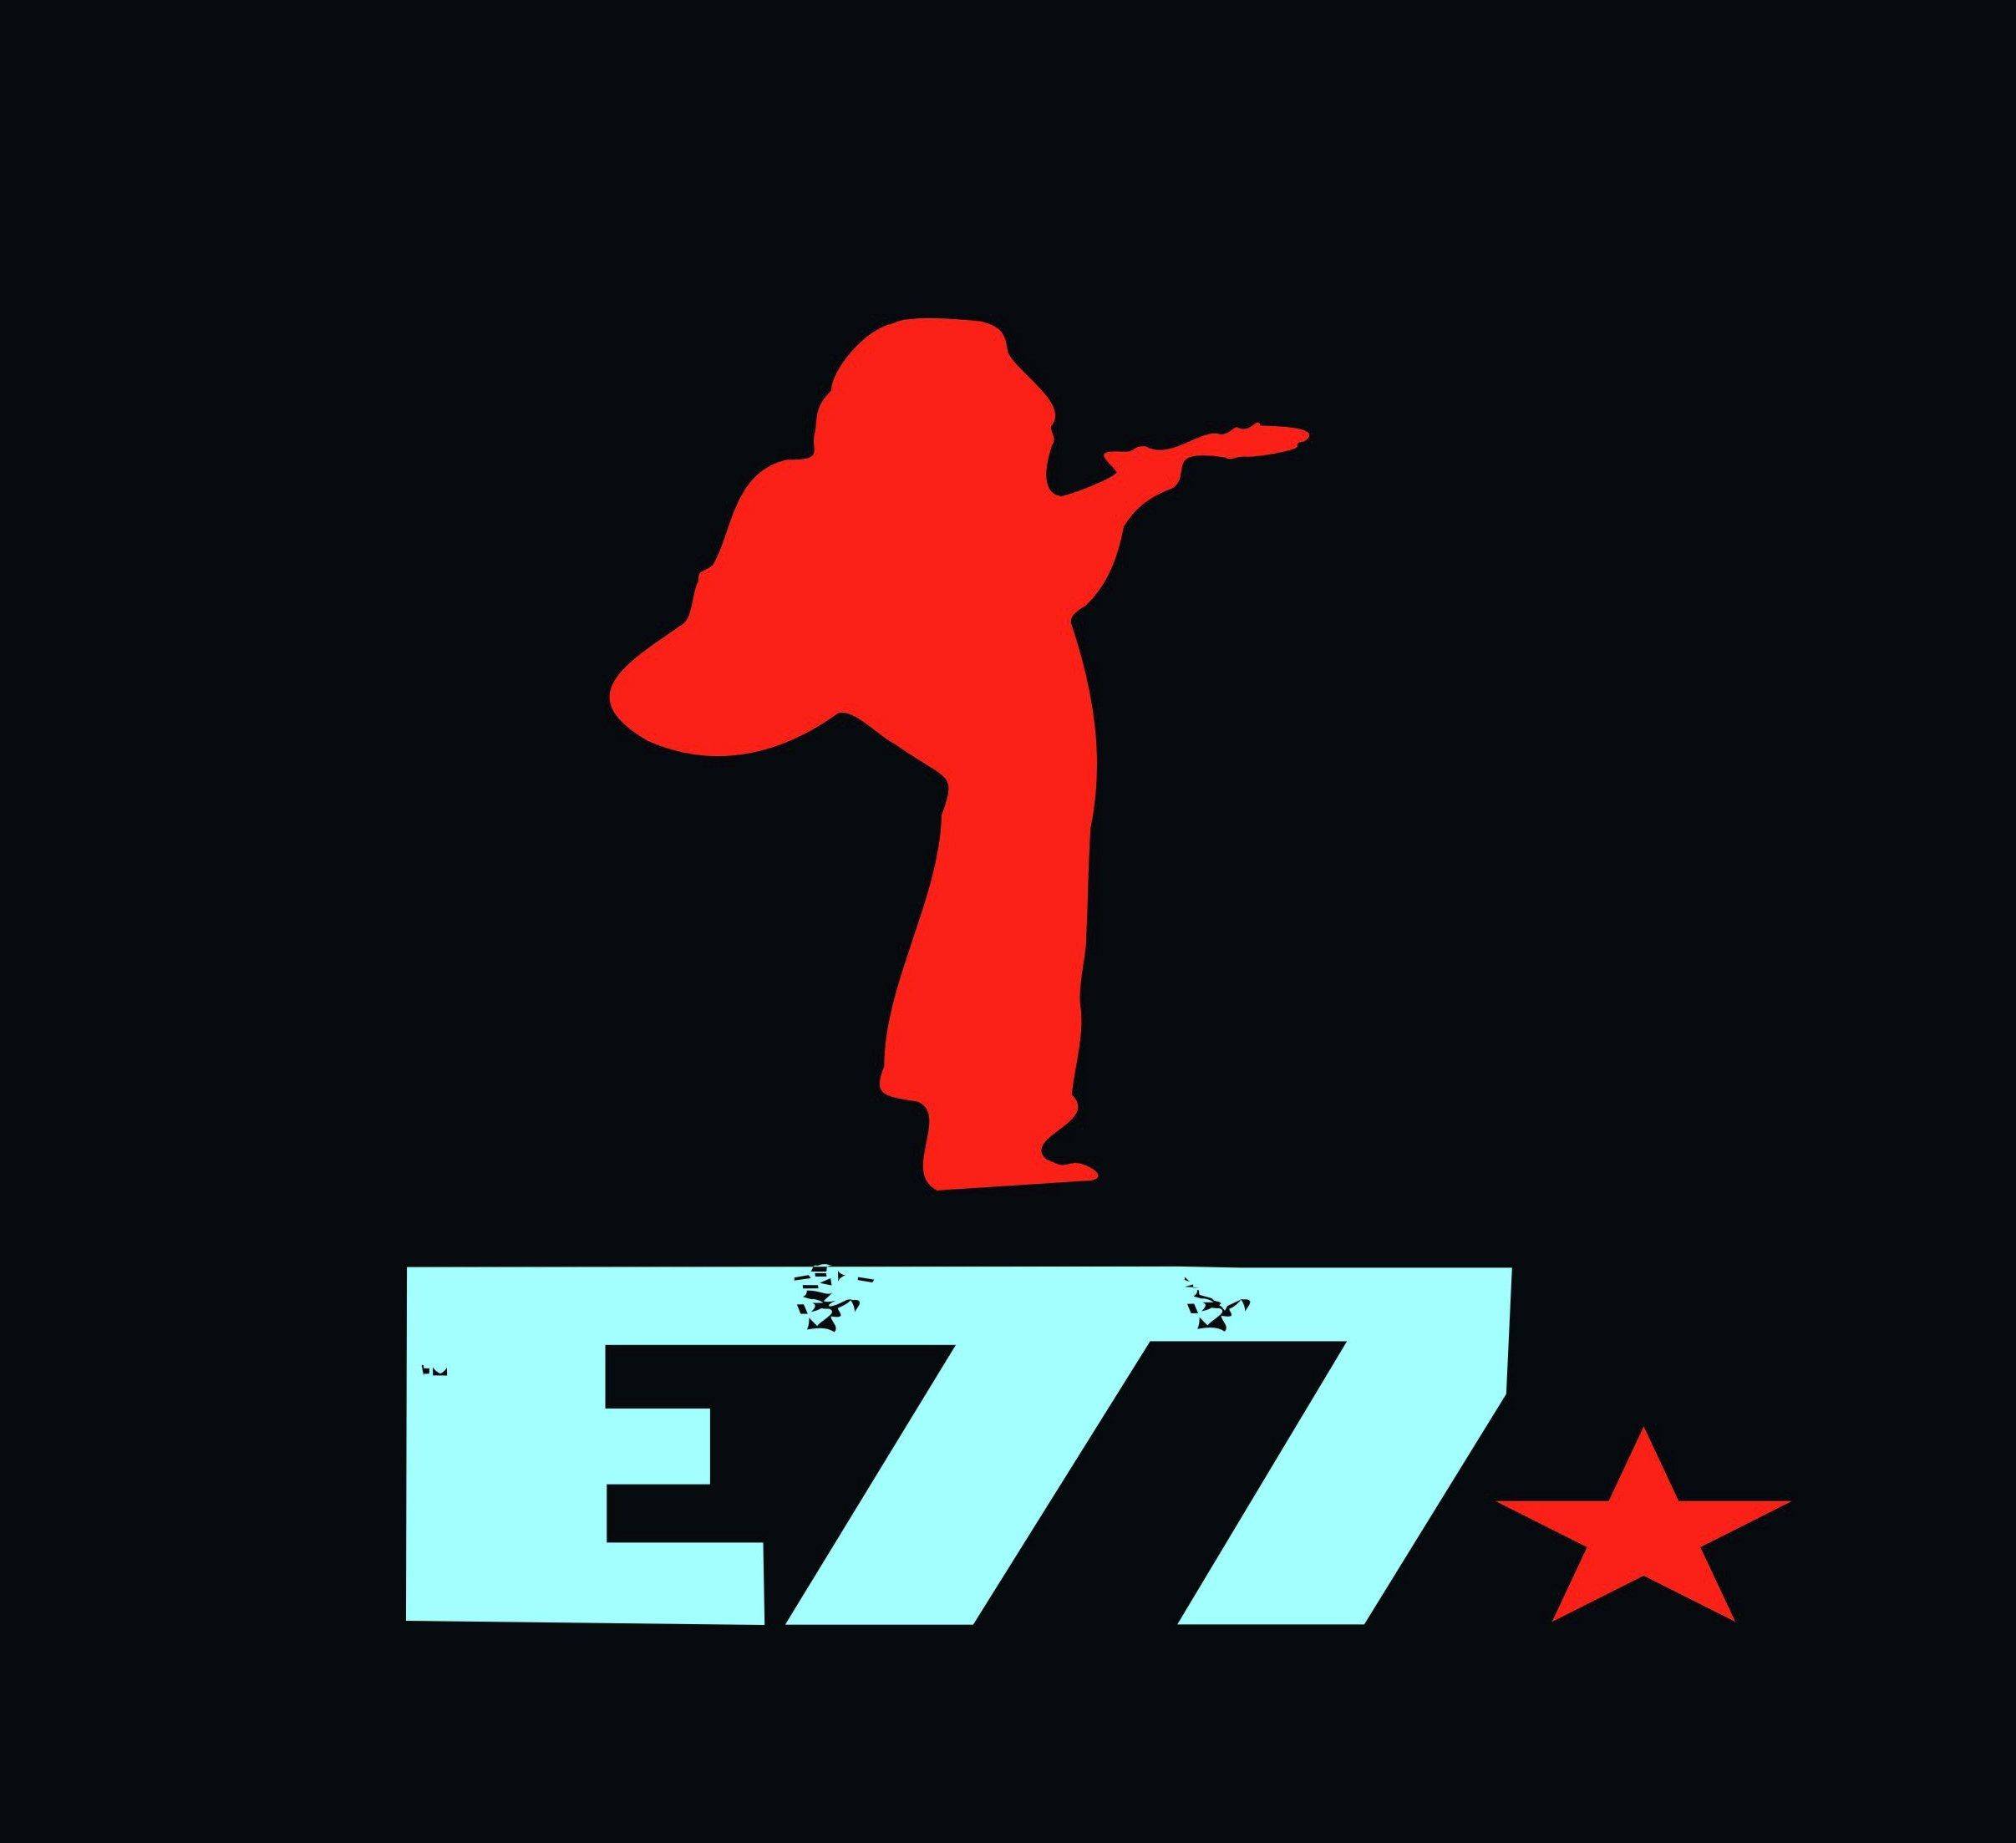 E 77